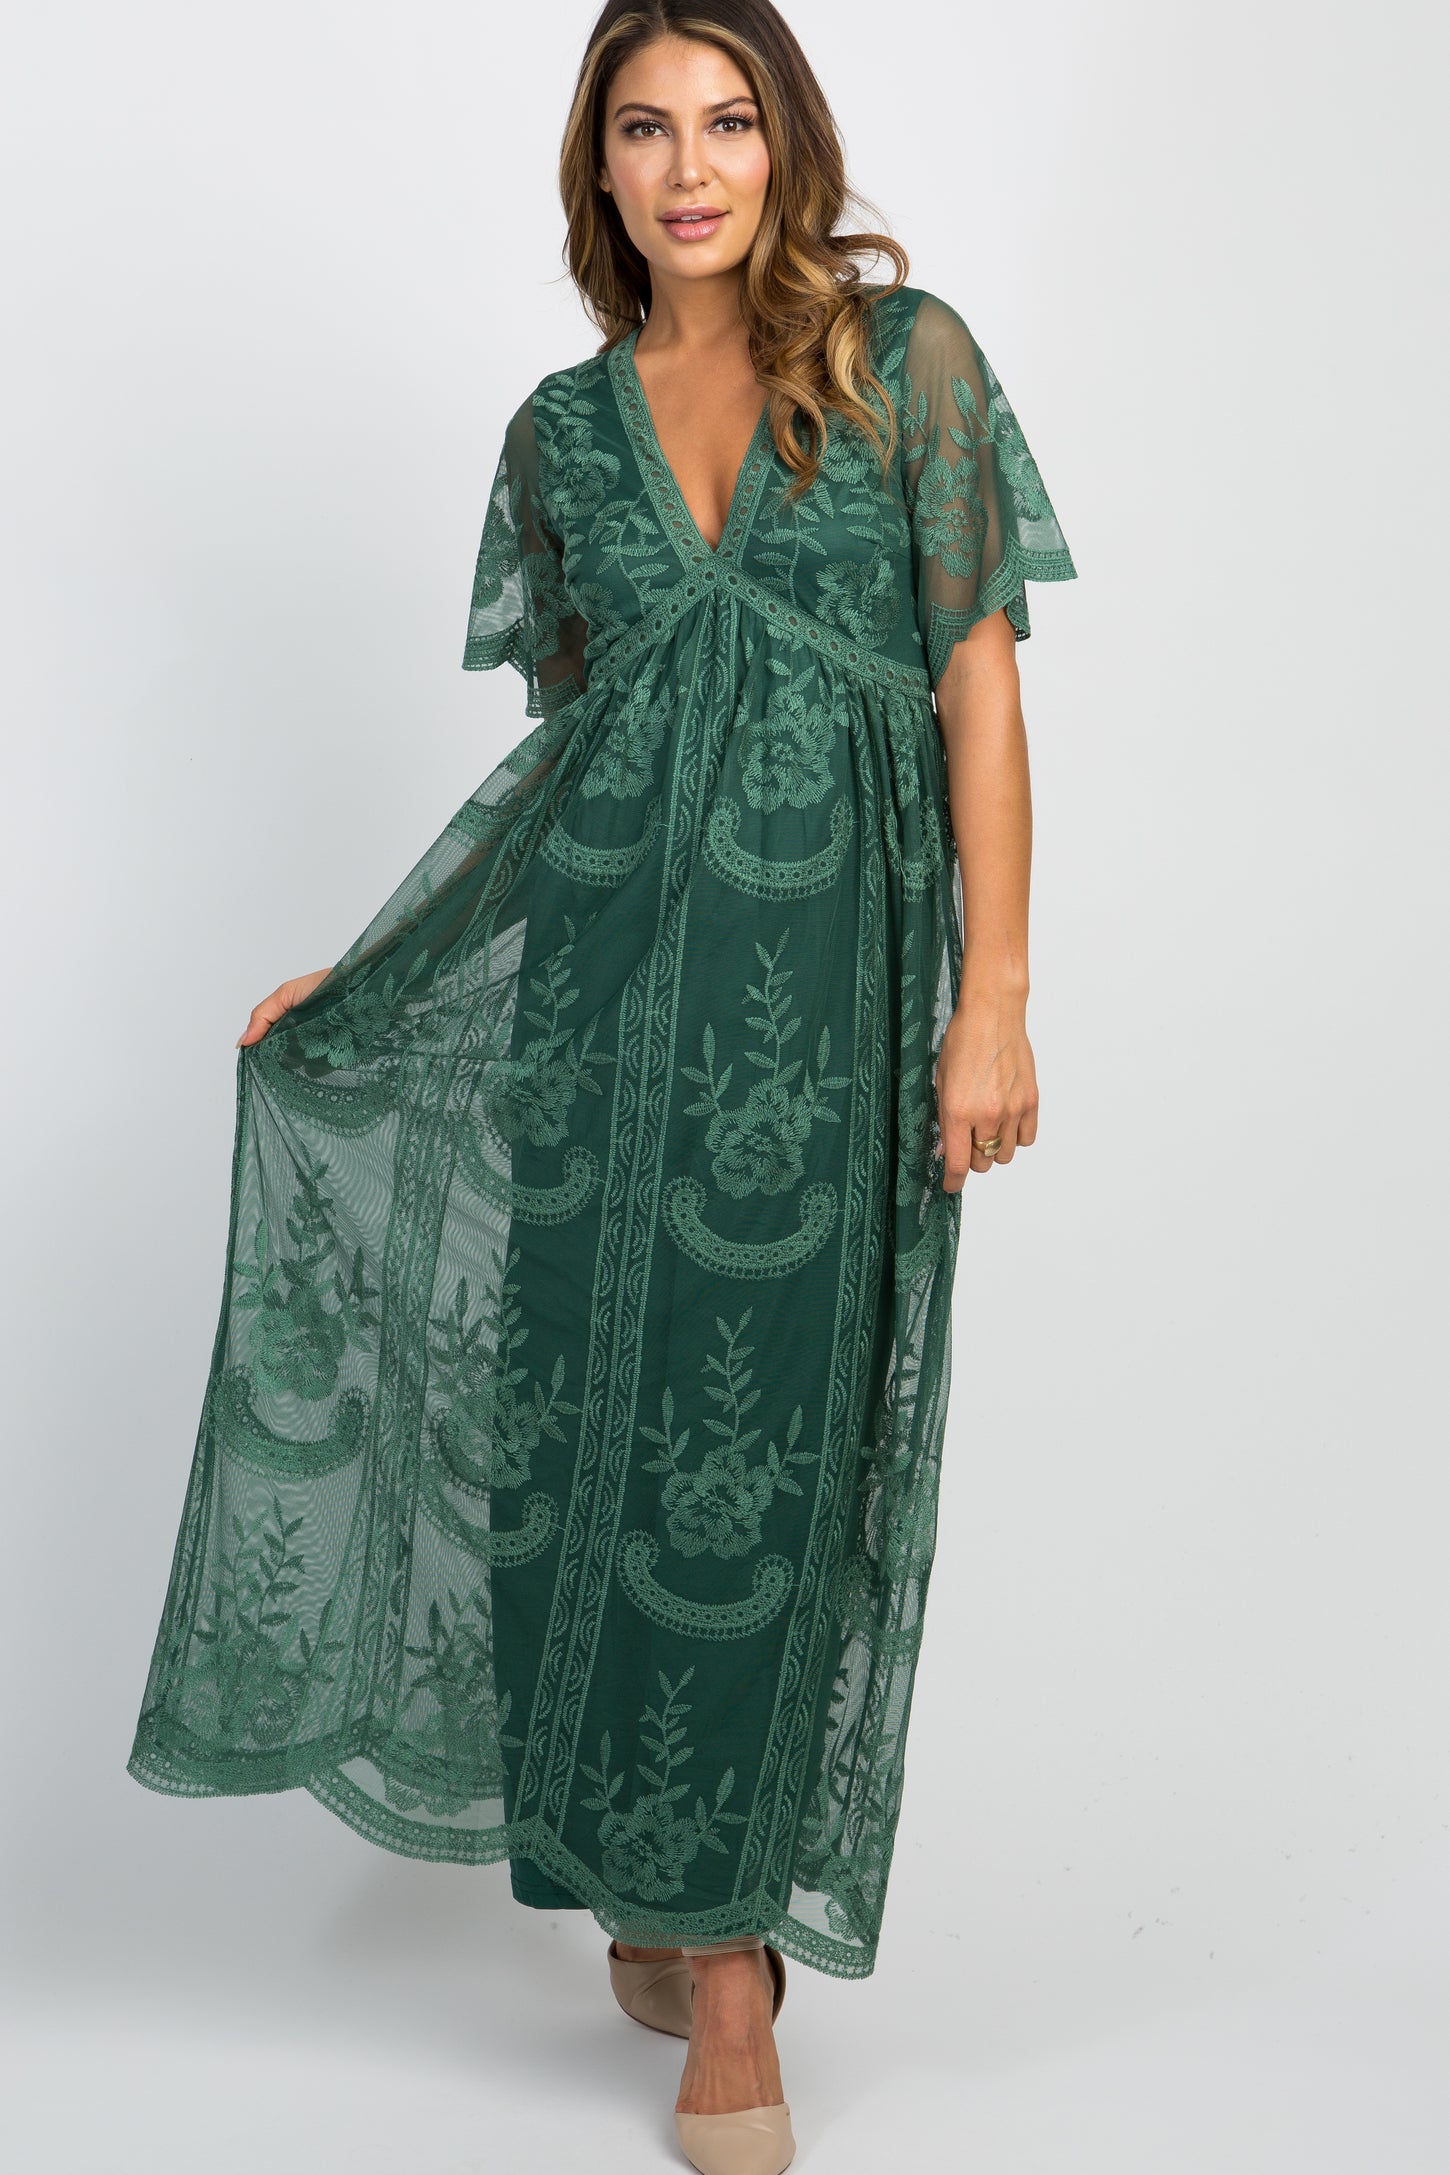 Teal Green Lace Mesh Overlay Maternity Maxi Dress– PinkBlush